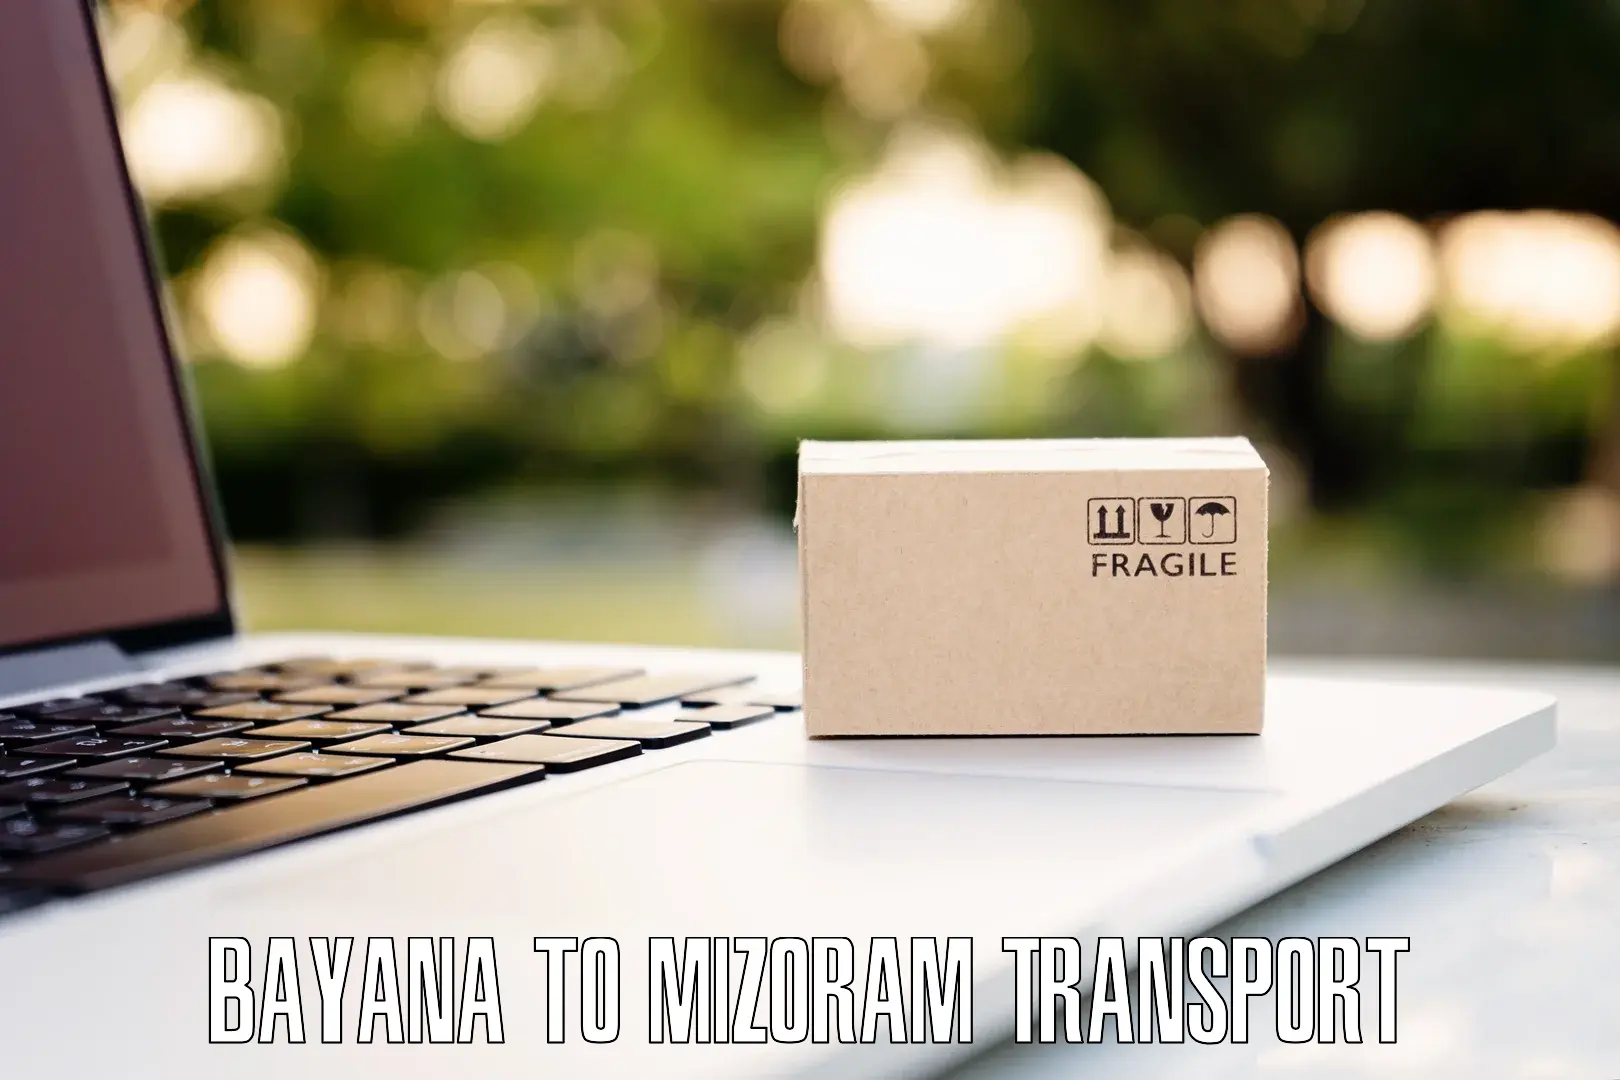 Sending bike to another city Bayana to Mizoram